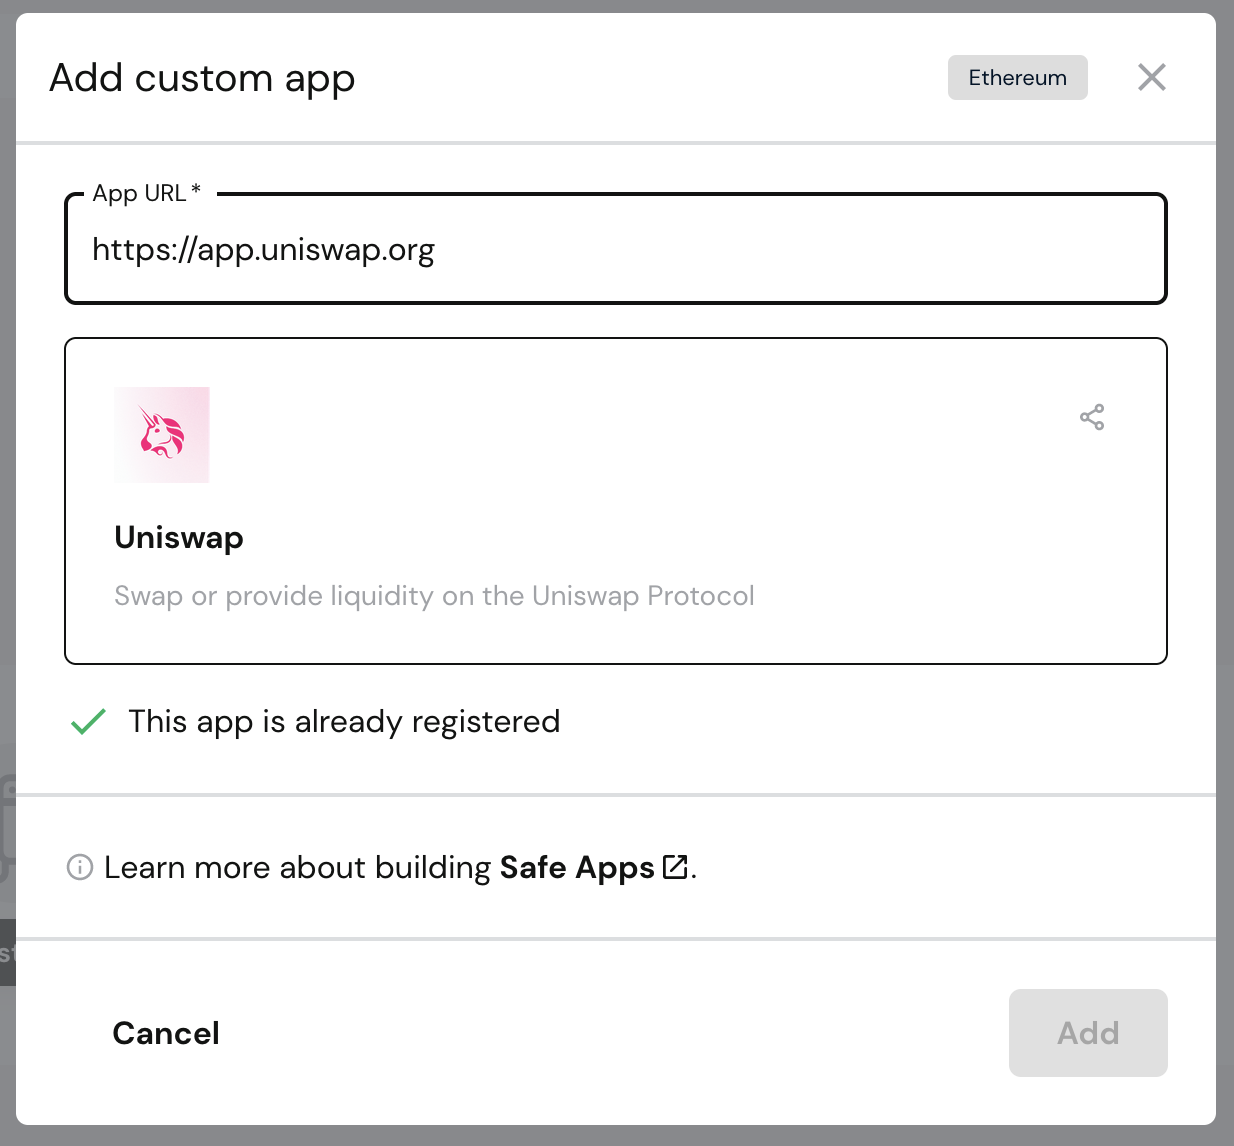 Add custom Safe App form